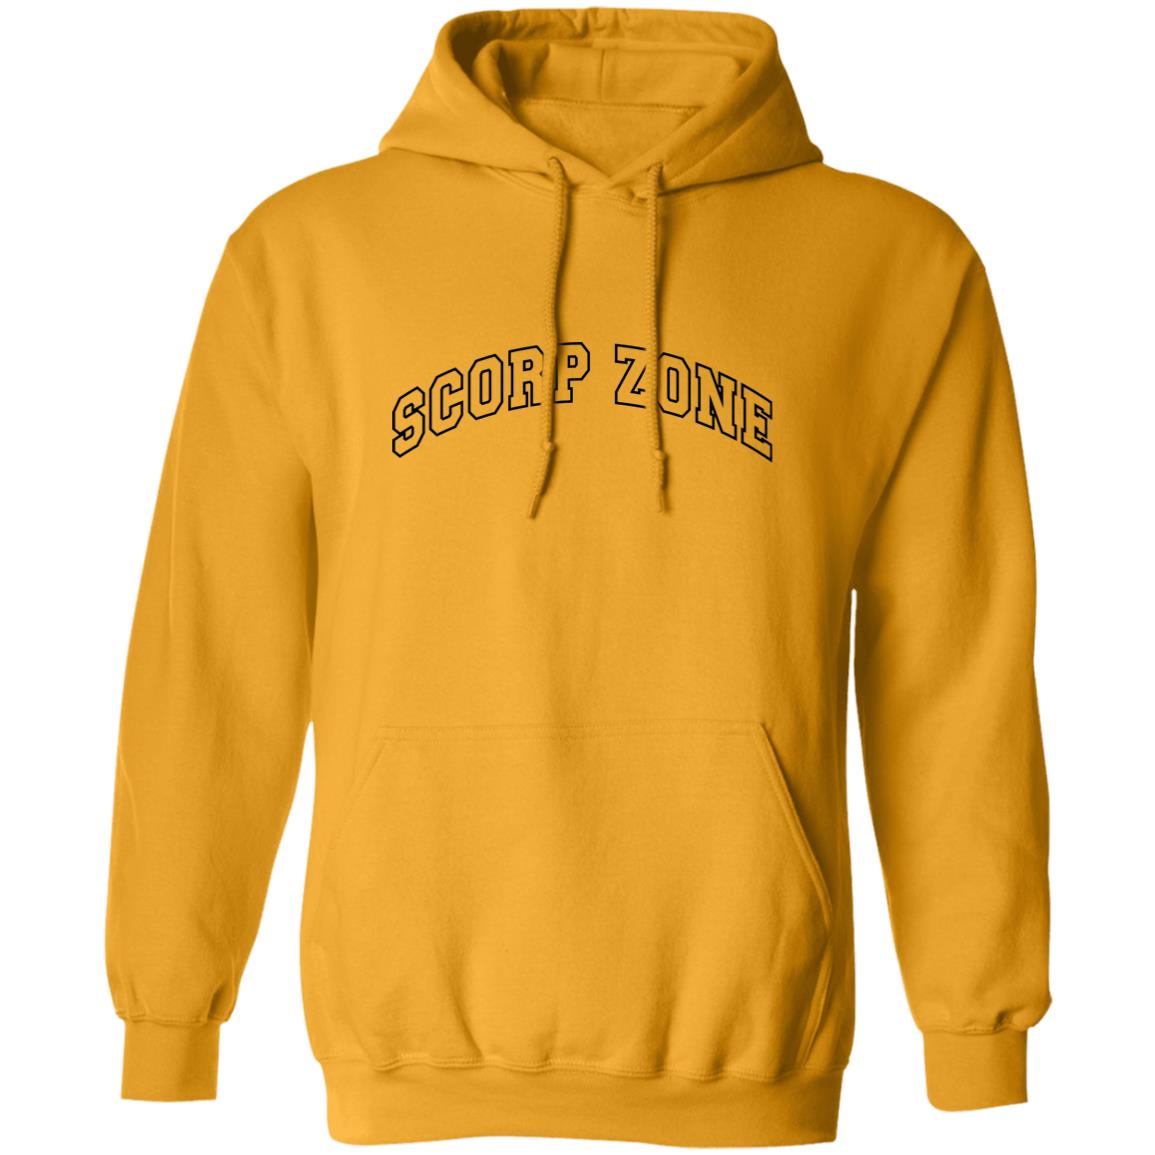 Everything Happens For A Reason Design-Black Logo Design- G185 Pullover Sweatshirt